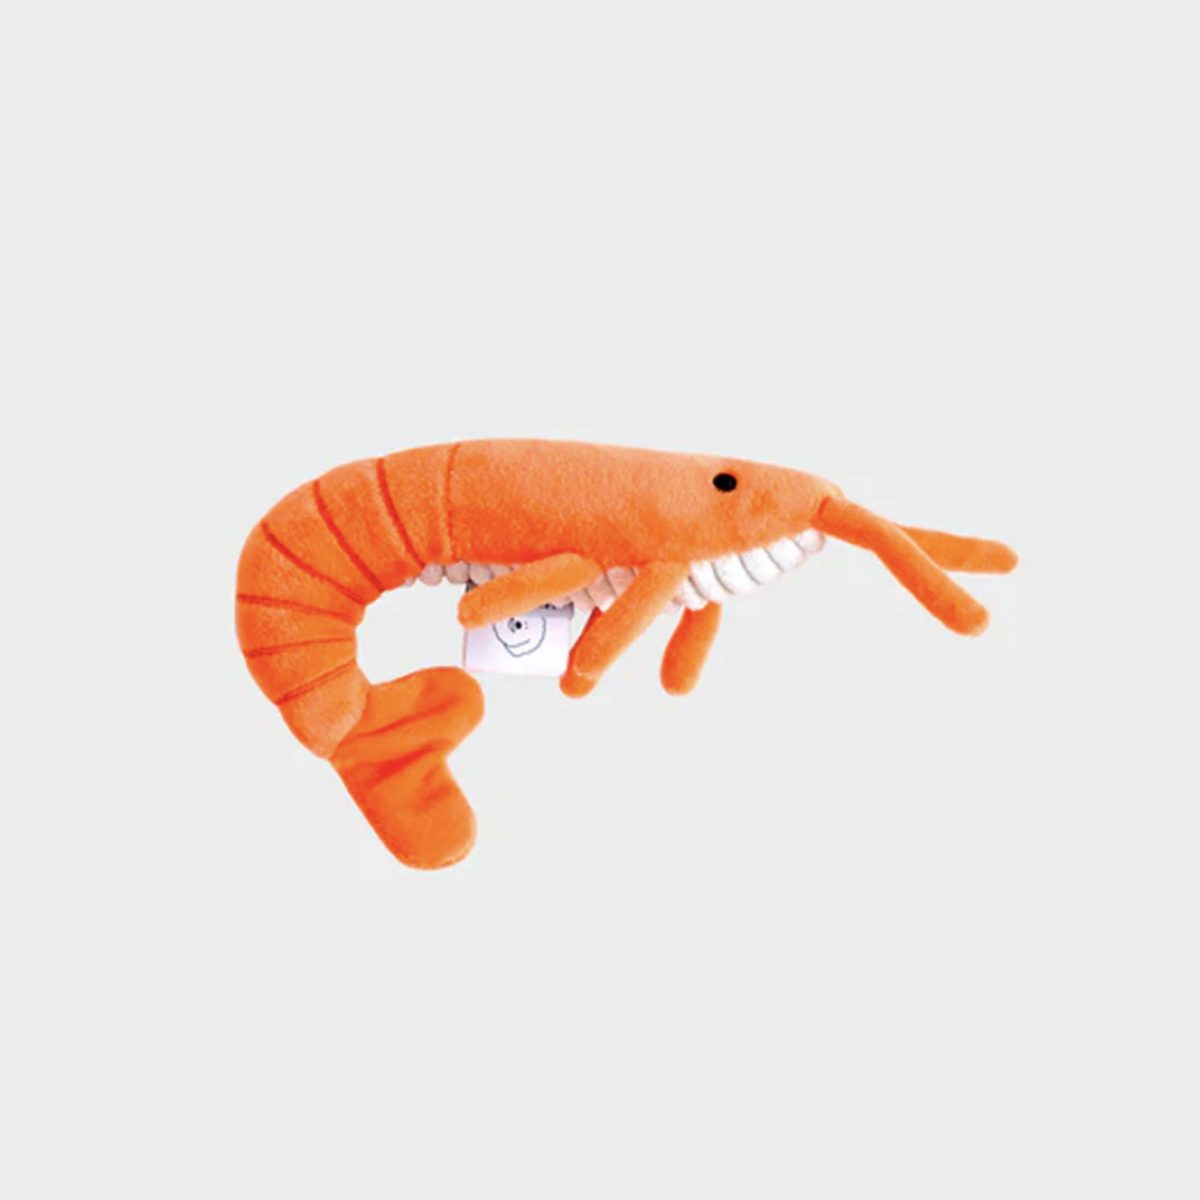 https://150102931.v2.pressablecdn.com/wp-content/uploads/2023/03/shrimp-pet-toy-1200x1200.jpg